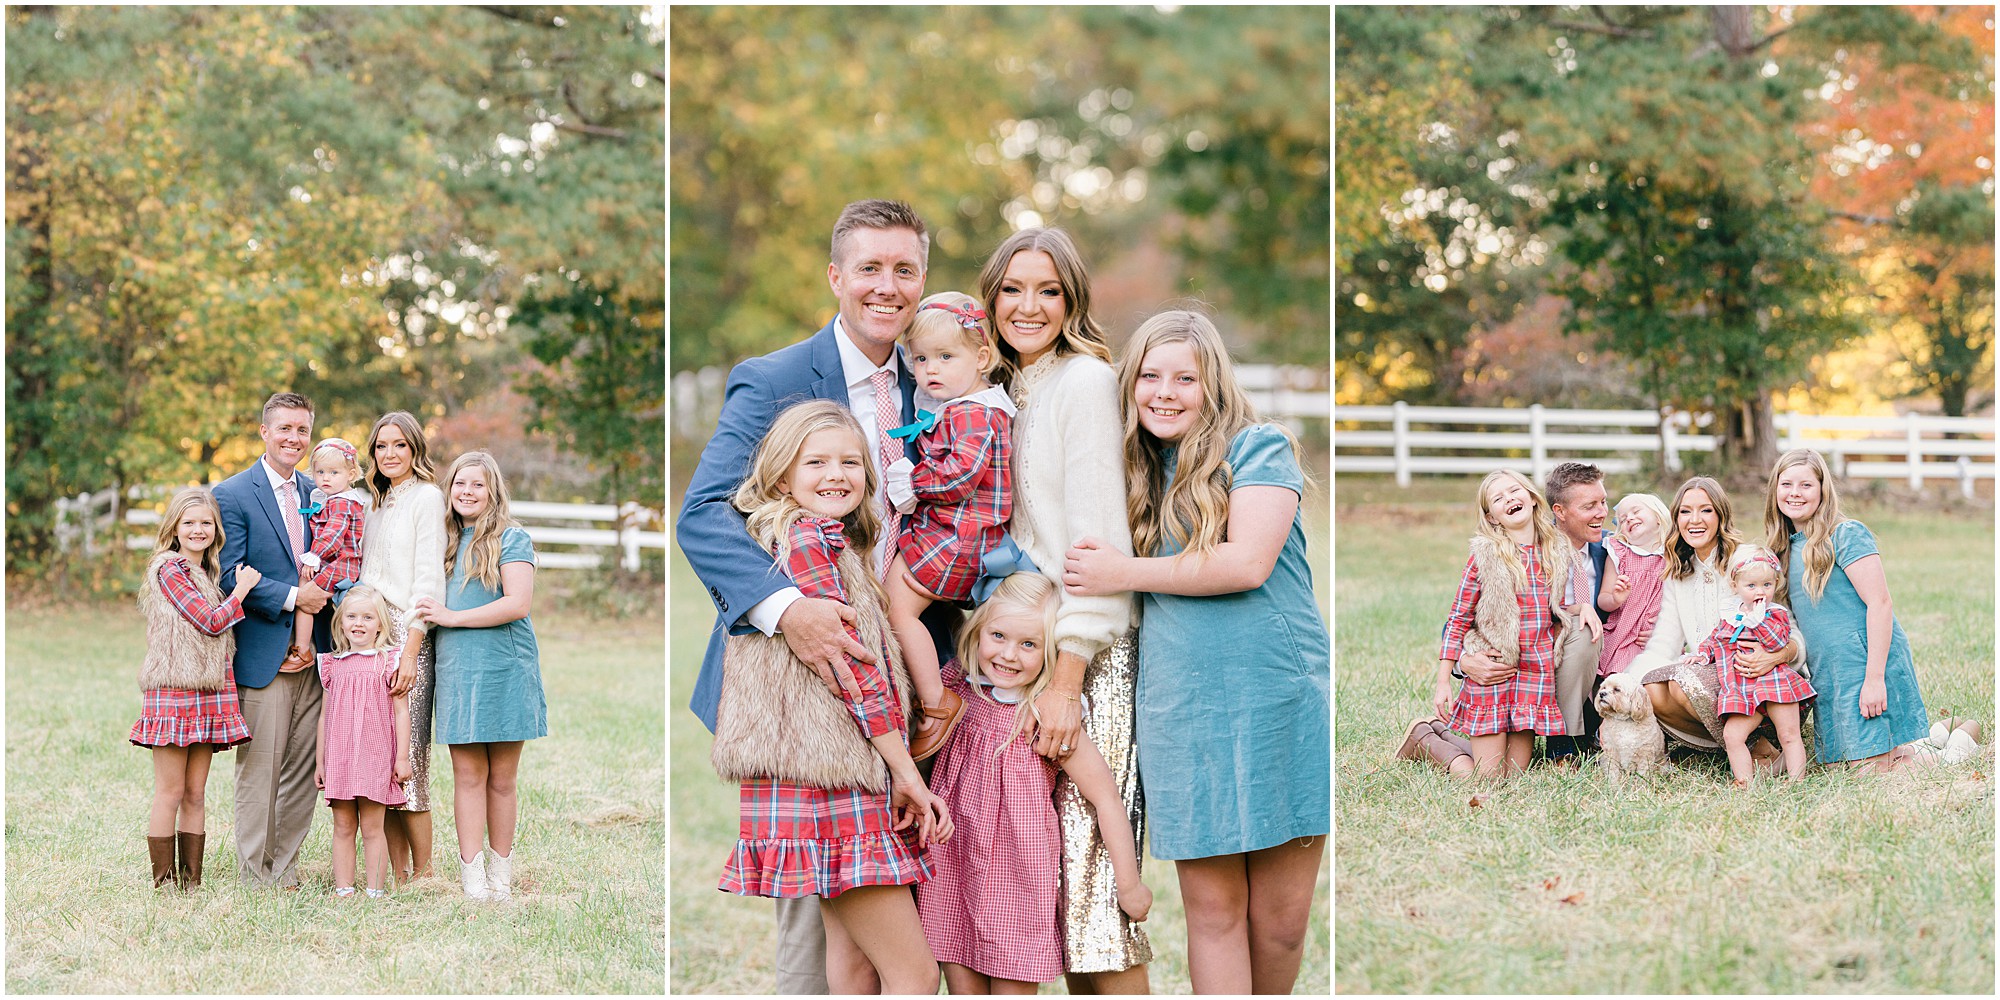 Fall family portraits in a field by Marietta GA photographer.